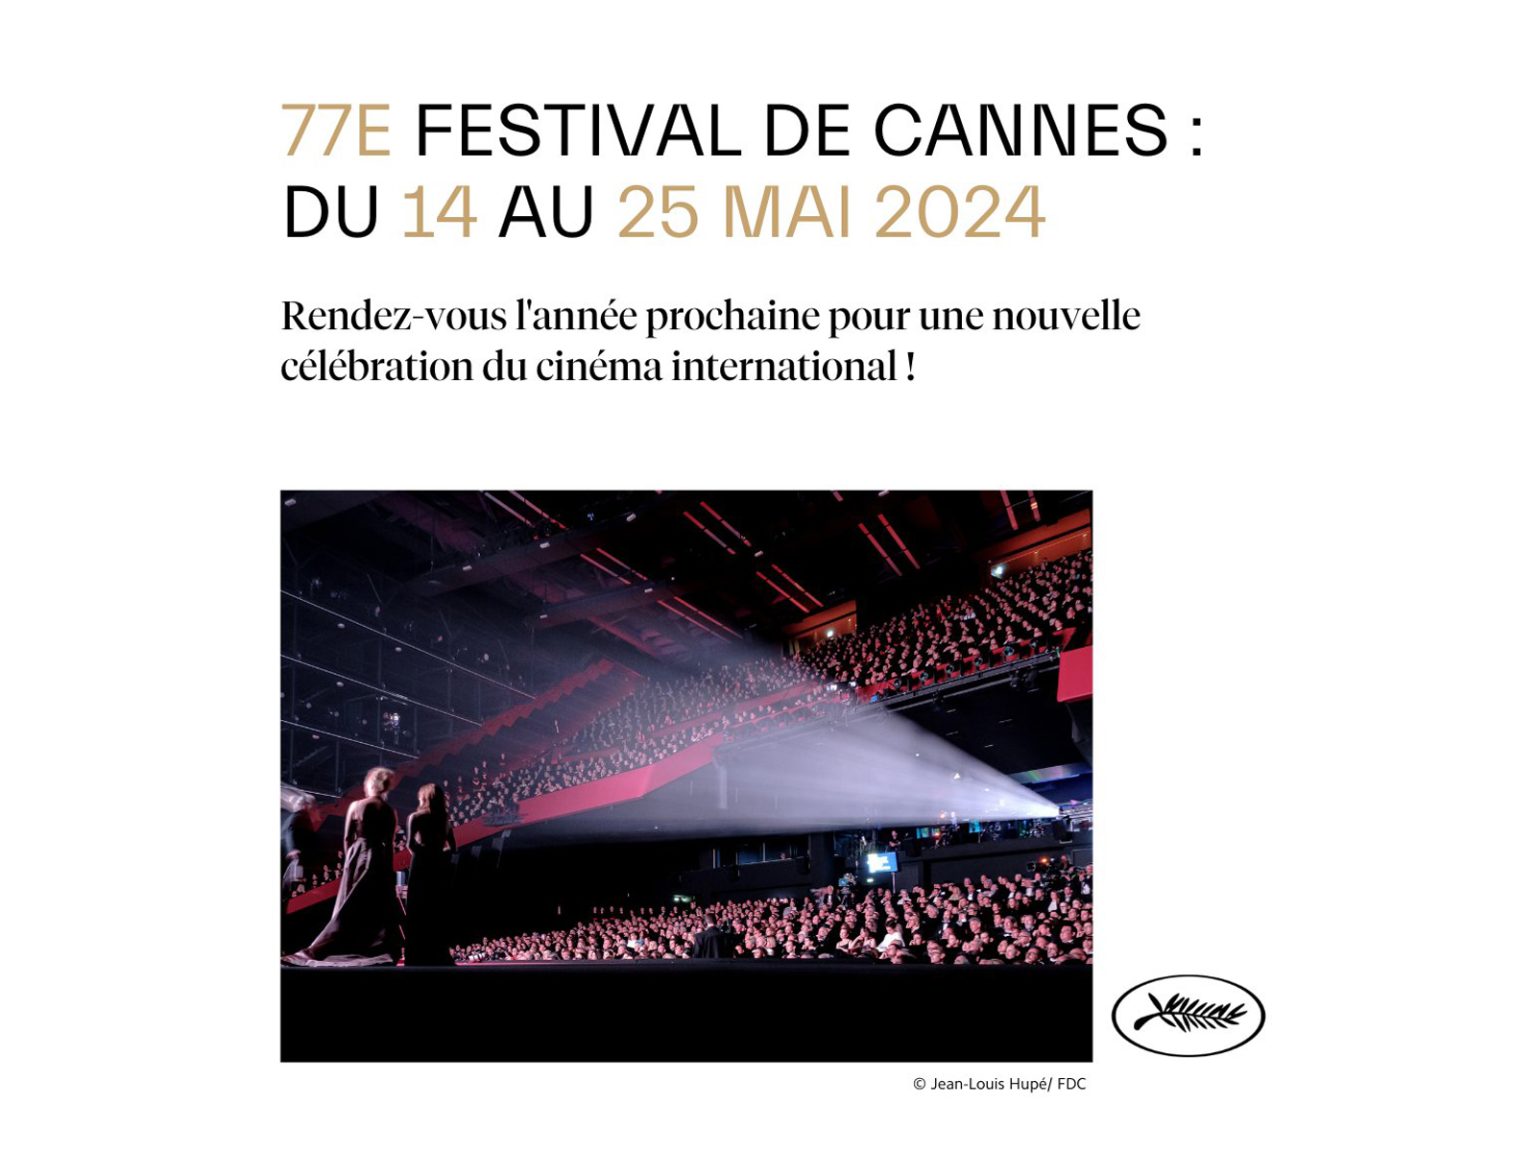 Cannes Film Festival reveals 2024 dates